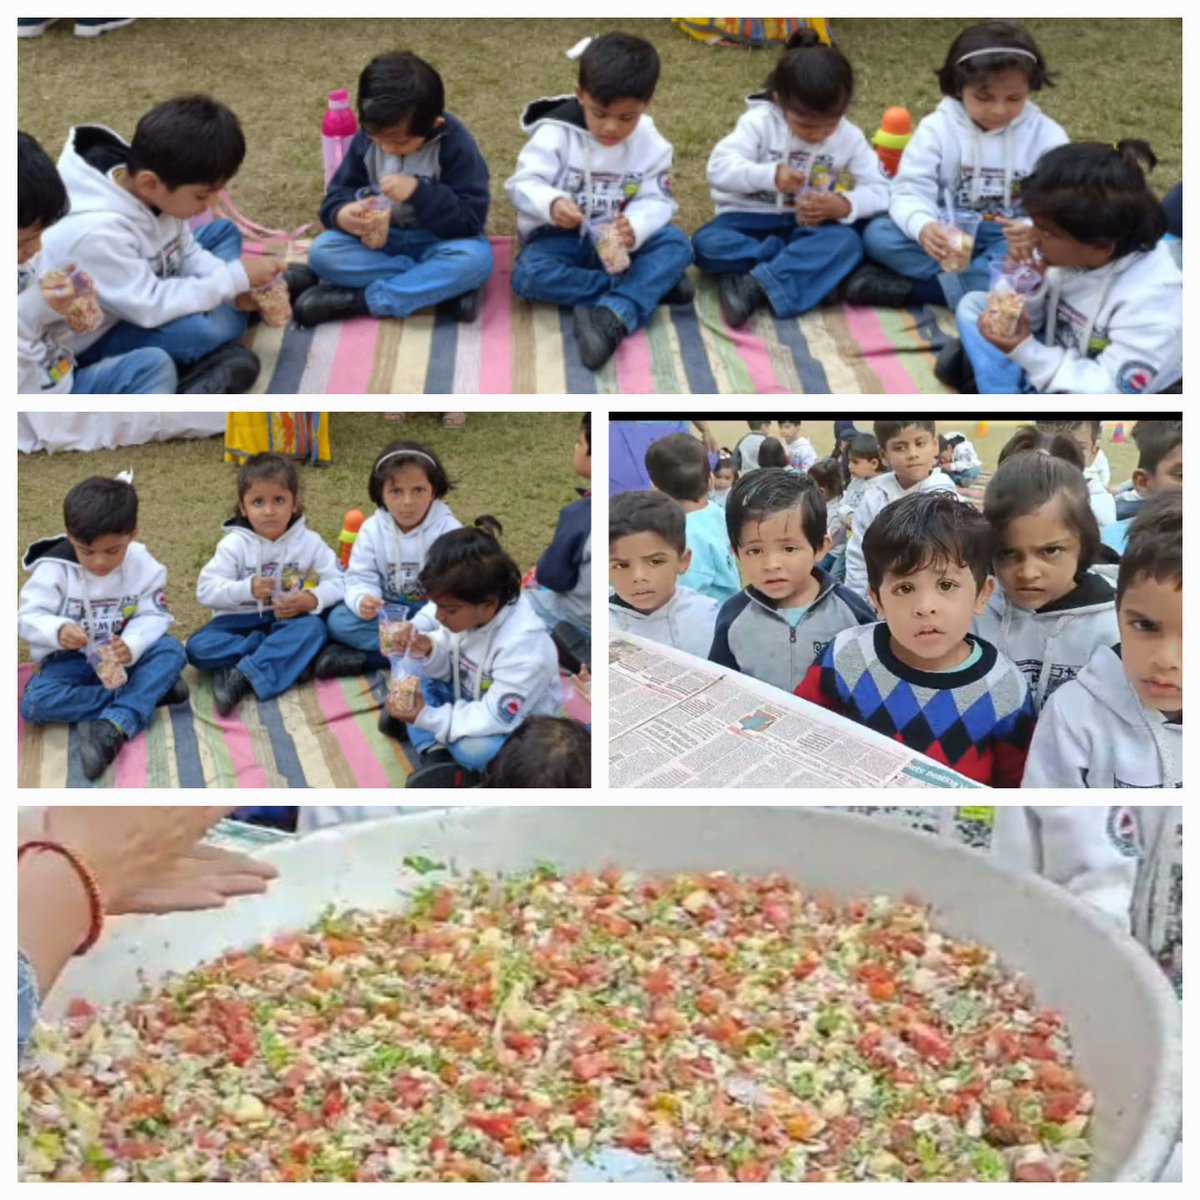 Delicious bhelpuri party🥳🥳

#bhelpuriparty #funactivitiesforkids #kindergarten #cbscschool #learning #preprimary #preschool #preschoolactivities #boardingschool #LearningIsFun #dayboardingschool